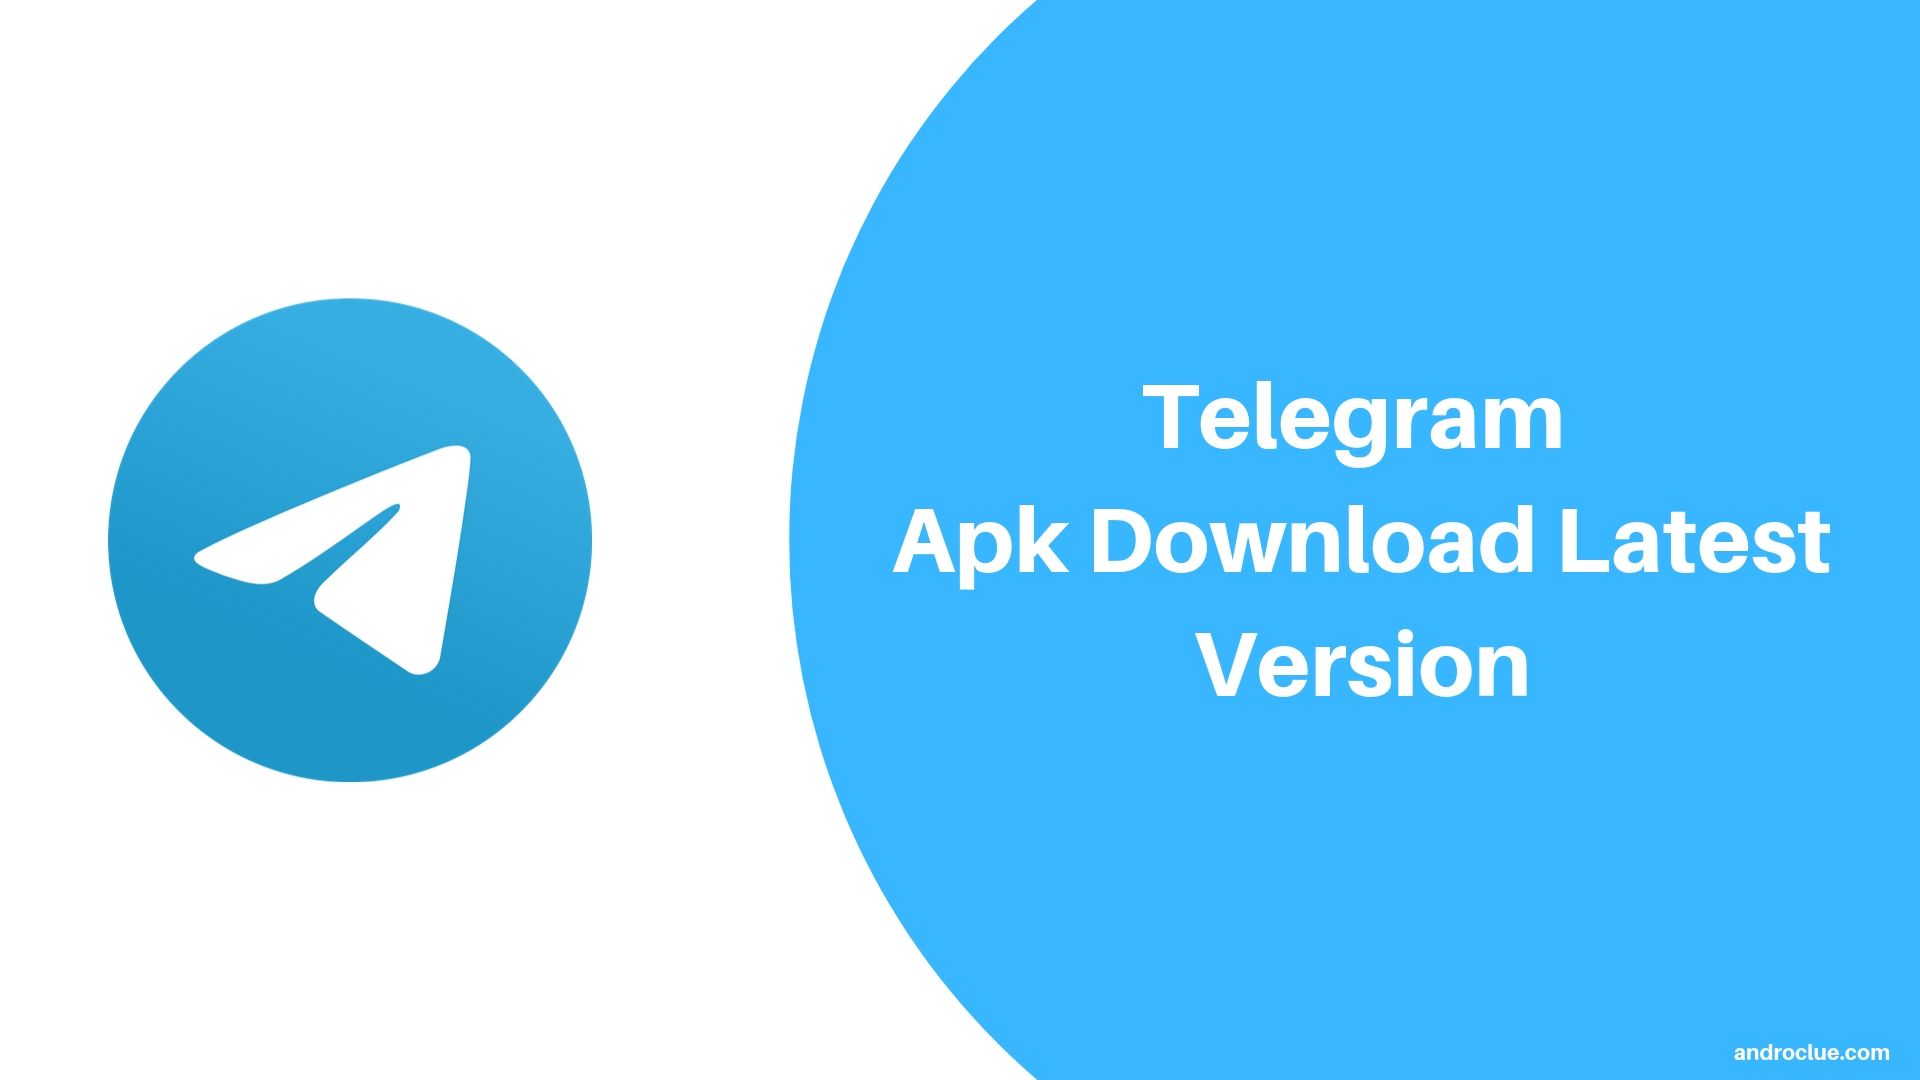 Telegram Apk Download Latest v5.11.0 for Android & PC (2019)